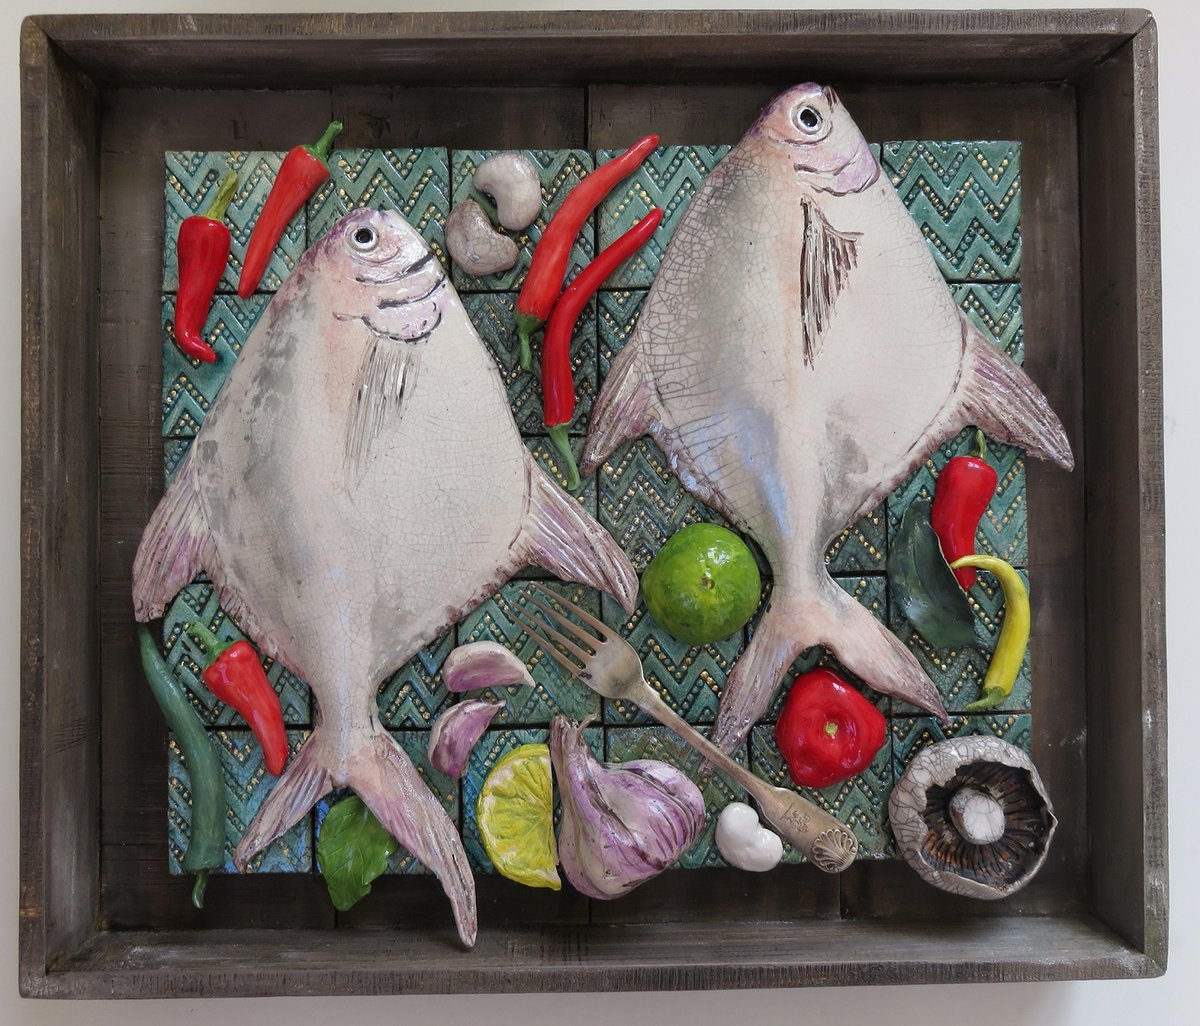 Some exotica from the Indian ocean - Two Pomfet Fish and Chillis, from my Inspiration India series.

#raku #ceramic #mixedmedia #reclaimedwood #prints #limitededition #handembellished #wallart #handmade #beautifulart #fruitbox #vegbox #pomfretfish #chillis #InspirationIndia